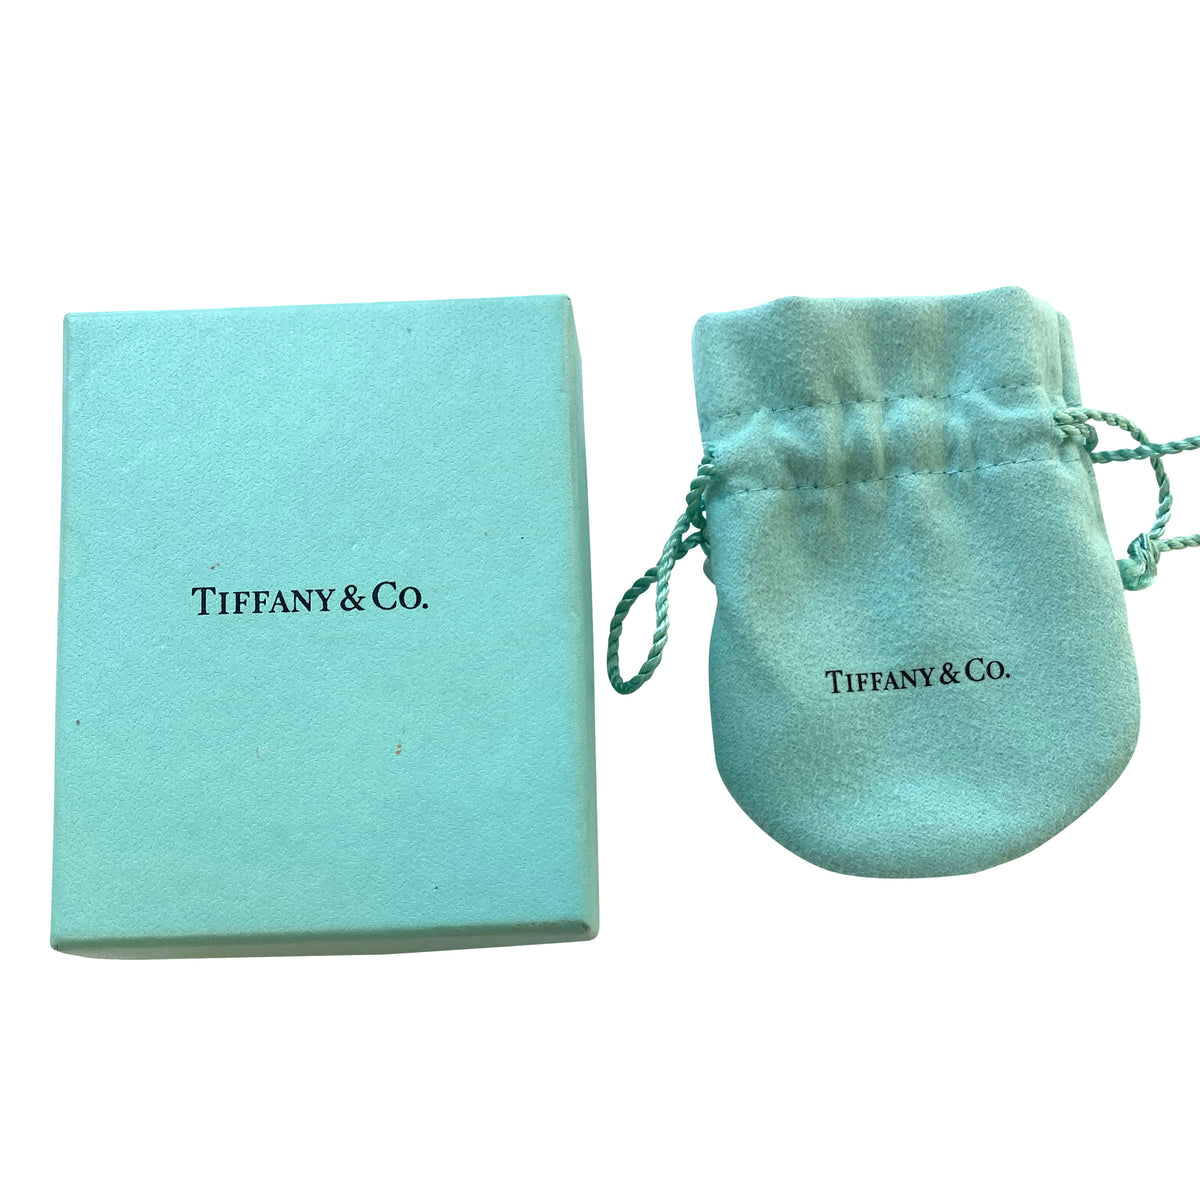 Tiffany & Co. Double Mini Heart Tag Pendant in Sterling Silver